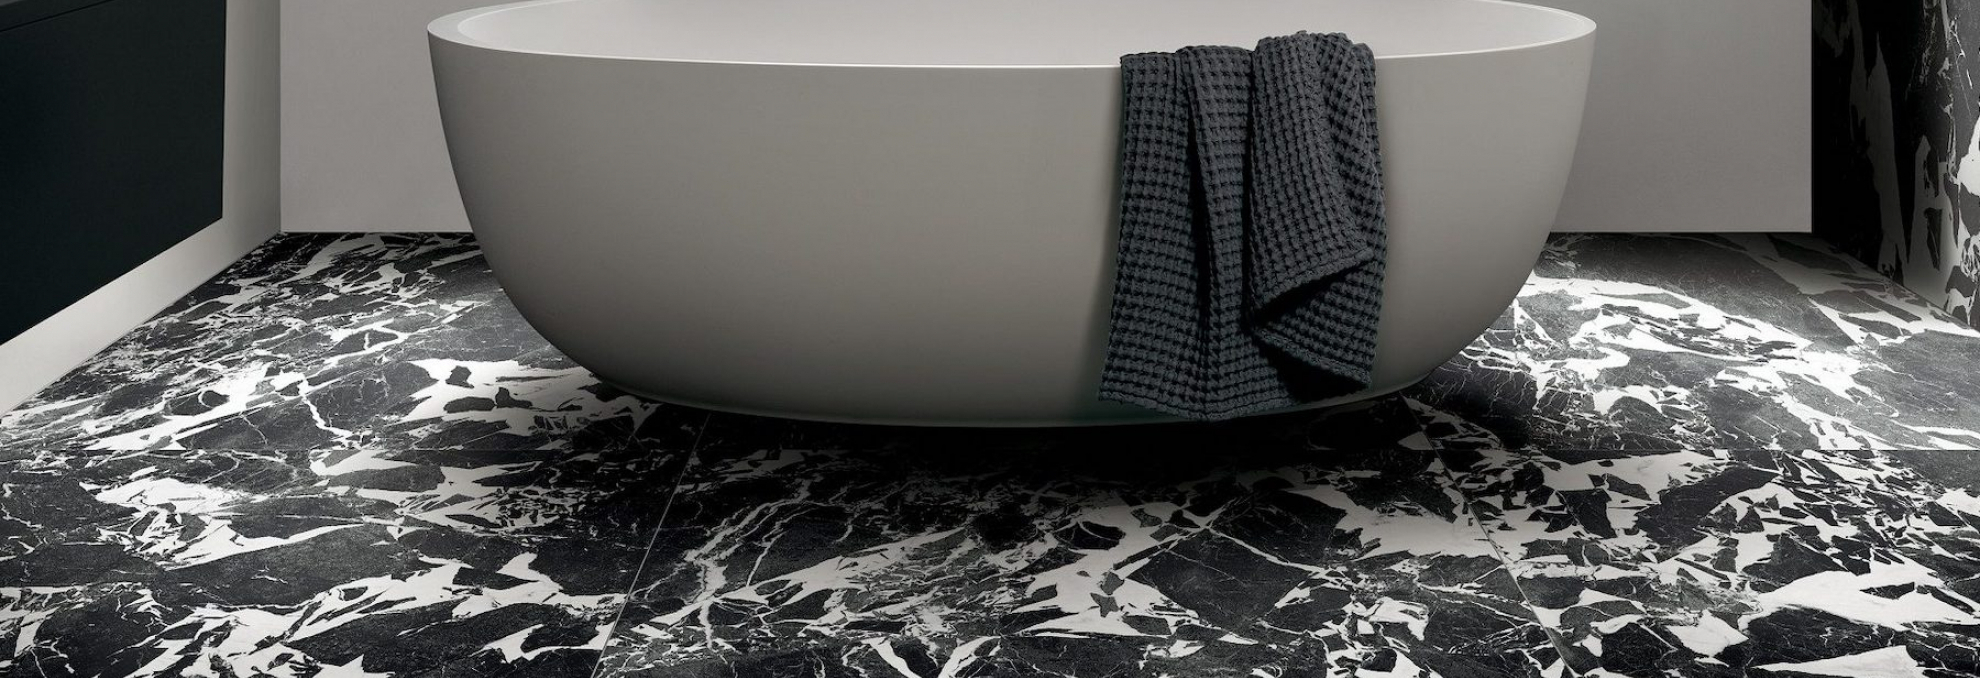 Koupelna v designu mramoru ze série B&W Marble